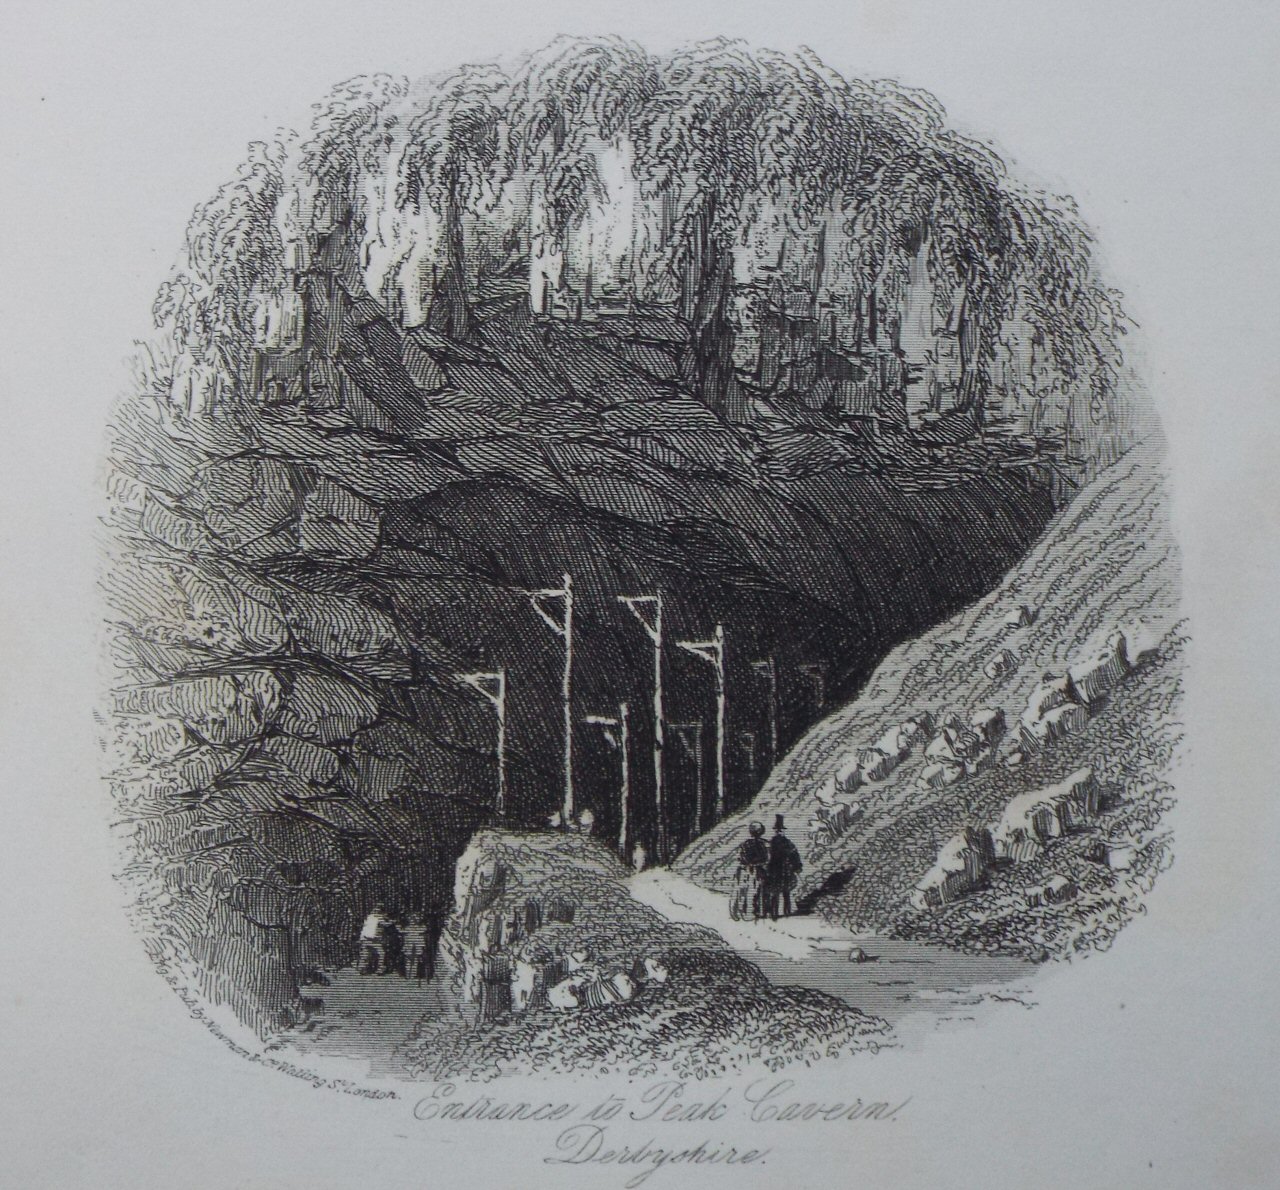 Steel Vignette - Entrance to Peak Cavern, Derbyshire. - Newman